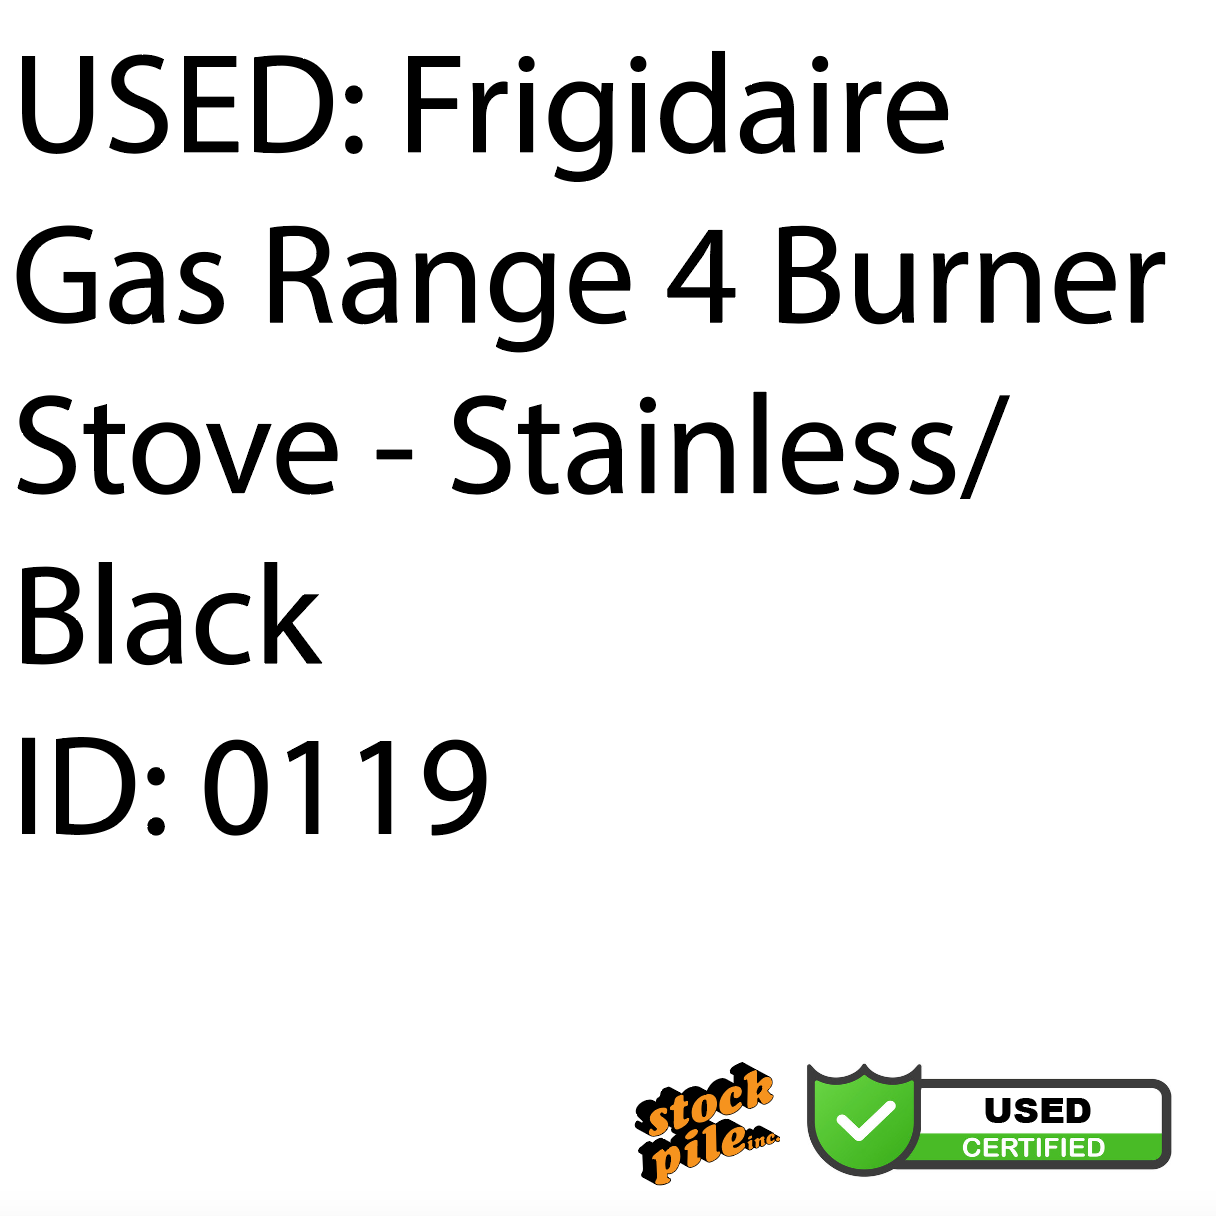 USED: Frigidaire Gas Range 4 Burner Stove - Stainless/ Black ID: 0119